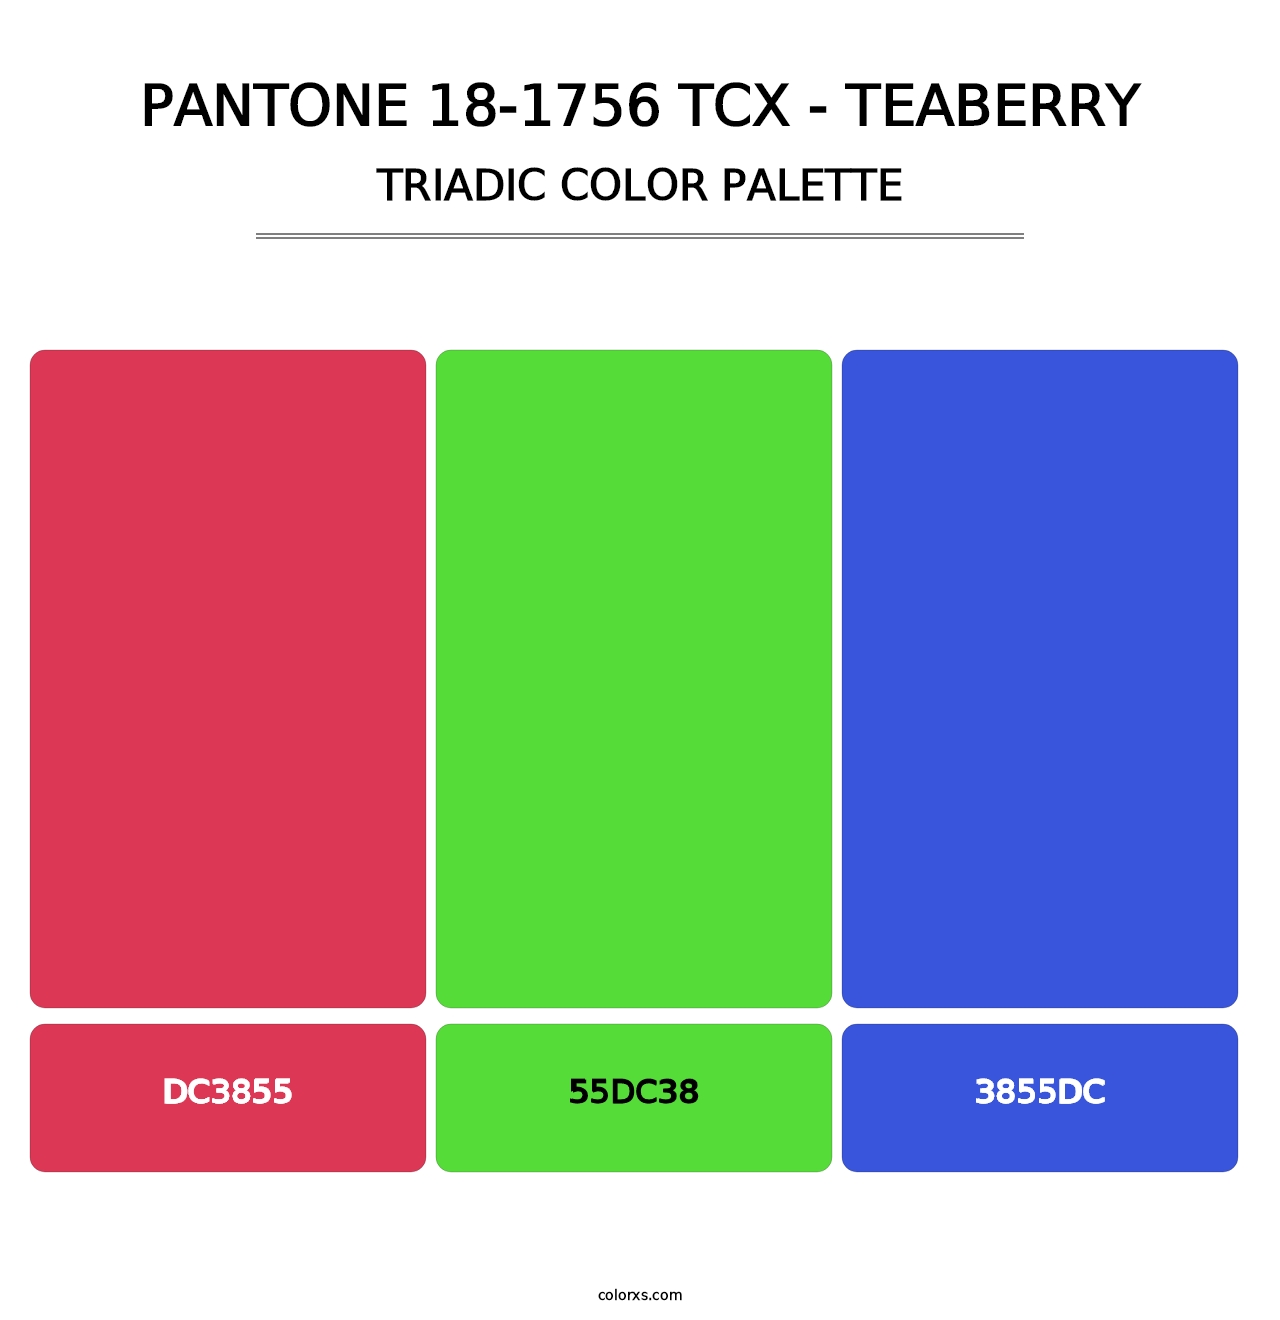 PANTONE 18-1756 TCX - Teaberry - Triadic Color Palette